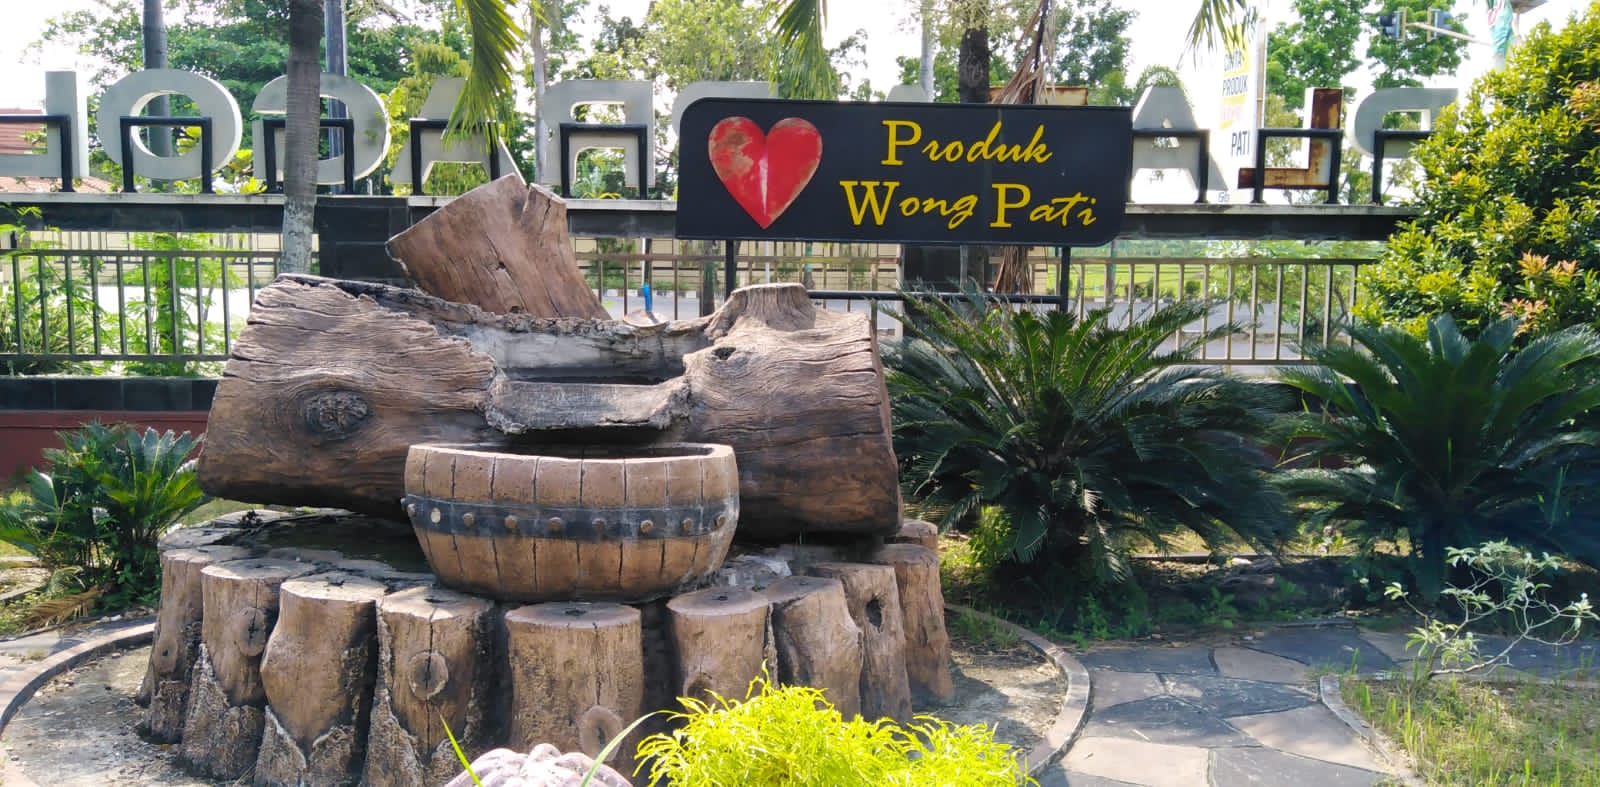 Taman depan Plaza Pragolo mendorong untuk mencintai produk wong Pati